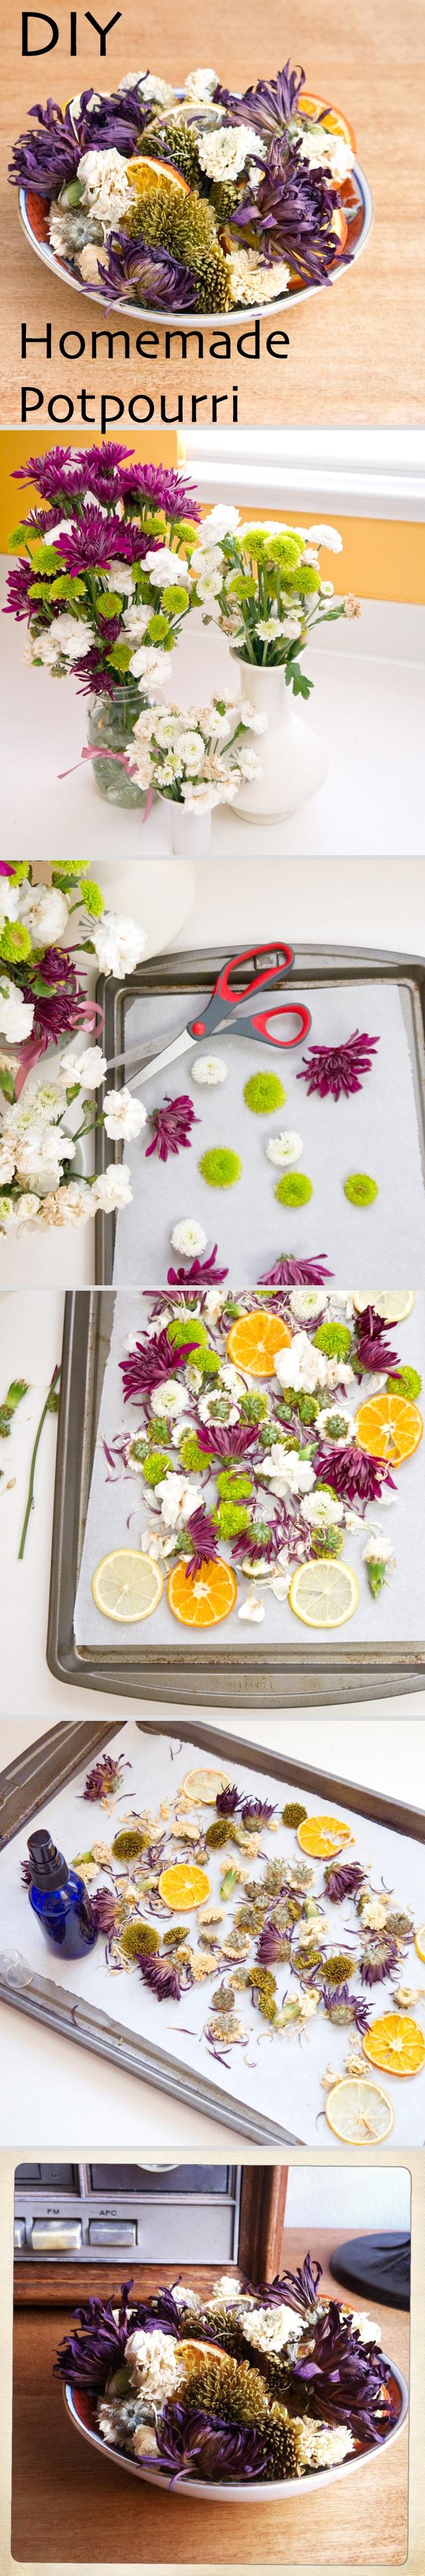 Wedding - Don't Toss Those Flowers! How To Make Homemade Potpourri